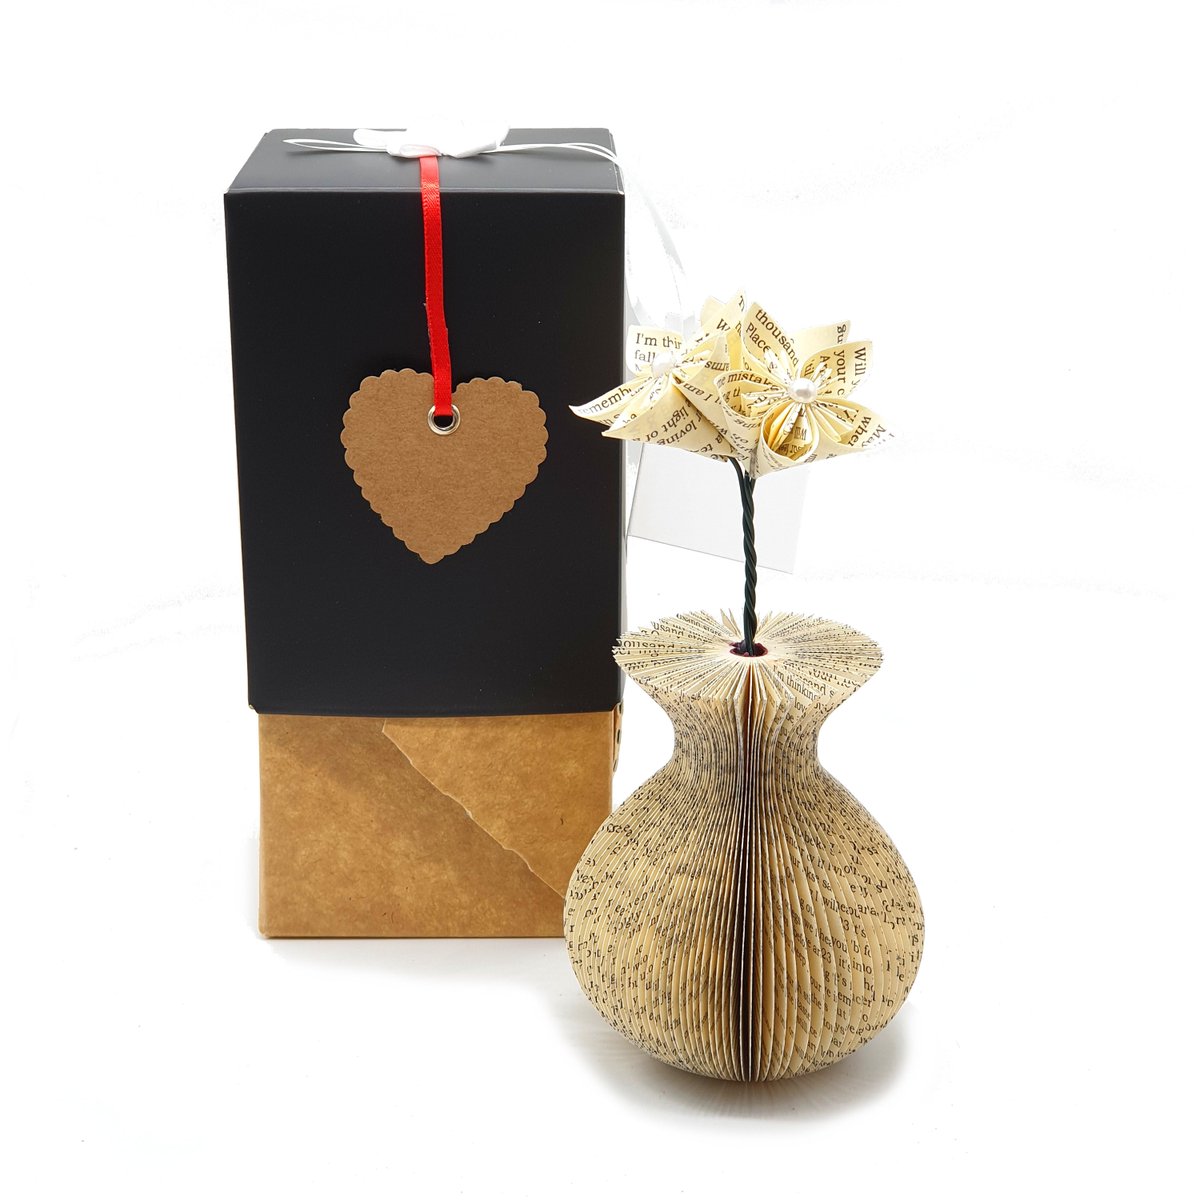 Paper Vase Personalised Message creatoncrafts.etsy.com/listing/772629… #WomaninBiz #CreatonCrafts #EpiconEtsy #Handmade #MHHSBD #WeddingGift